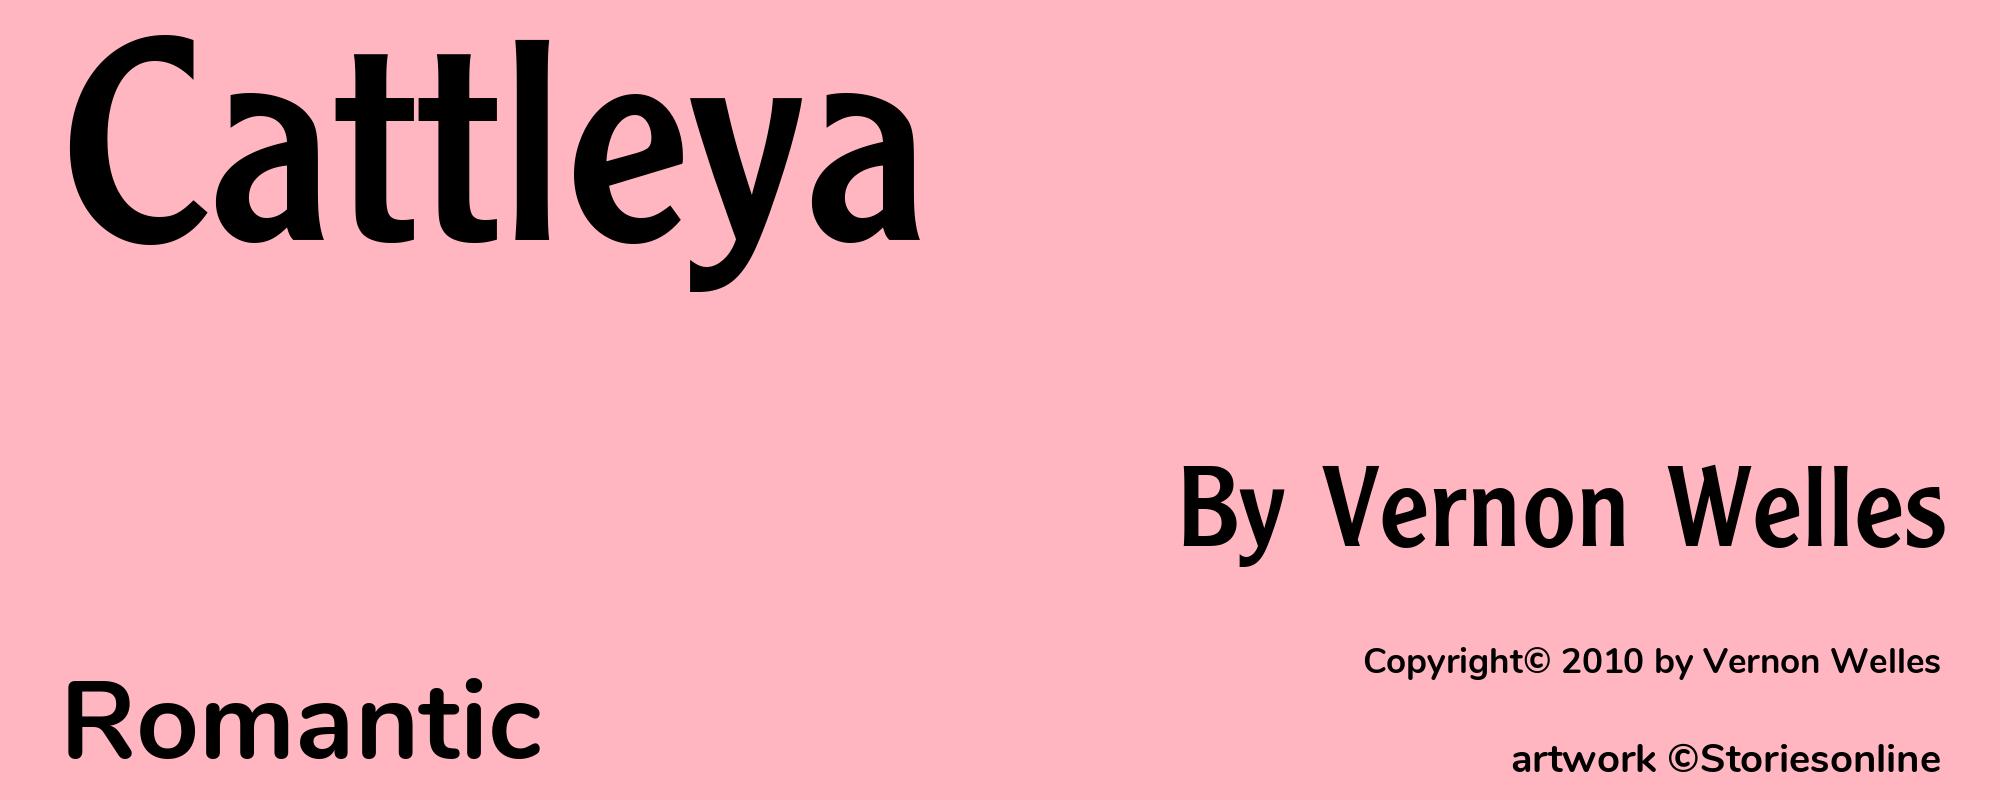 Cattleya - Cover